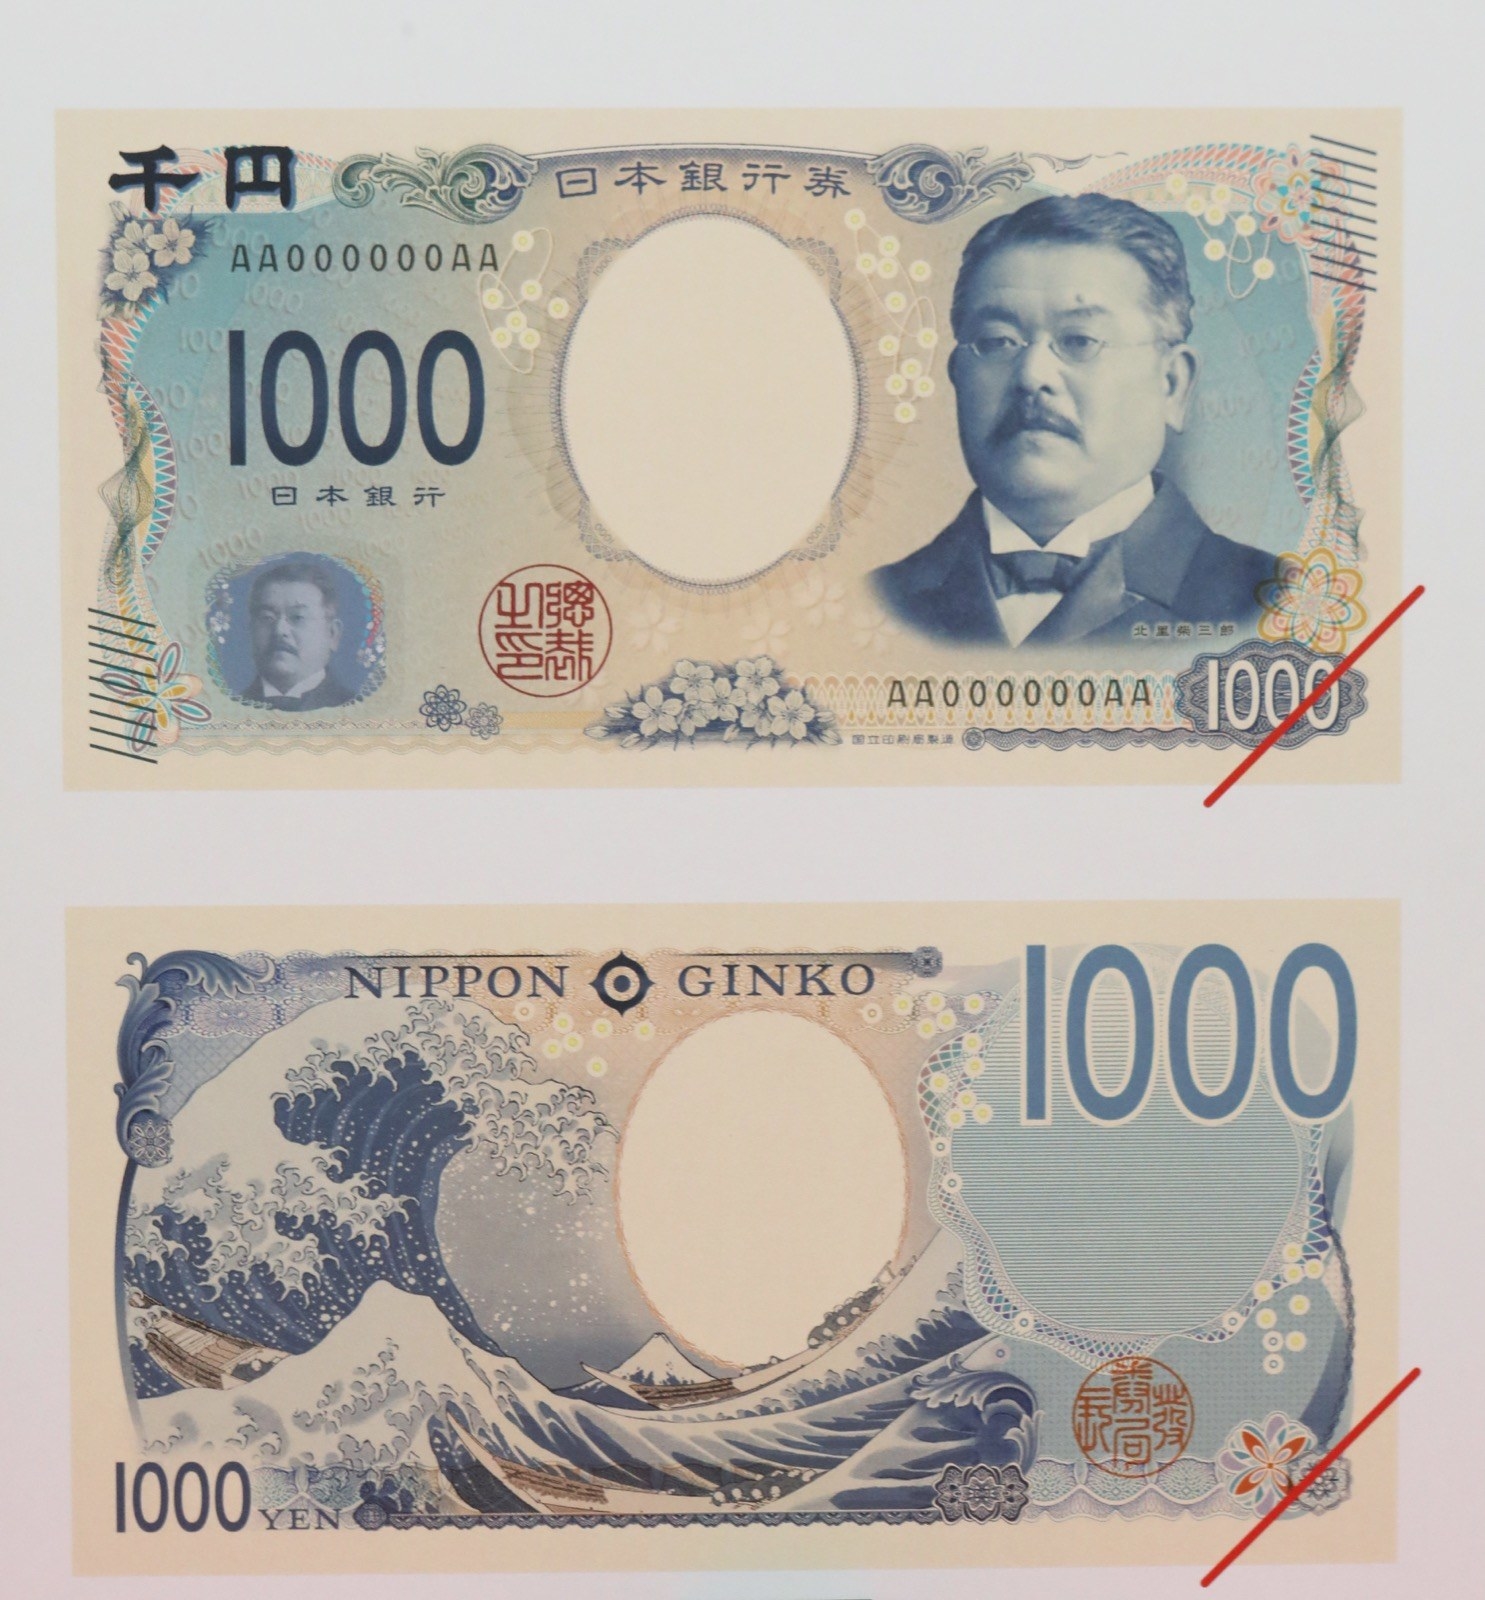 Купюры йен. Банкнота 1000 йен Япония. Японские йены 5000 йен. Банкноты Japan, 1000 yen,. Японские купюры 10000 йен.